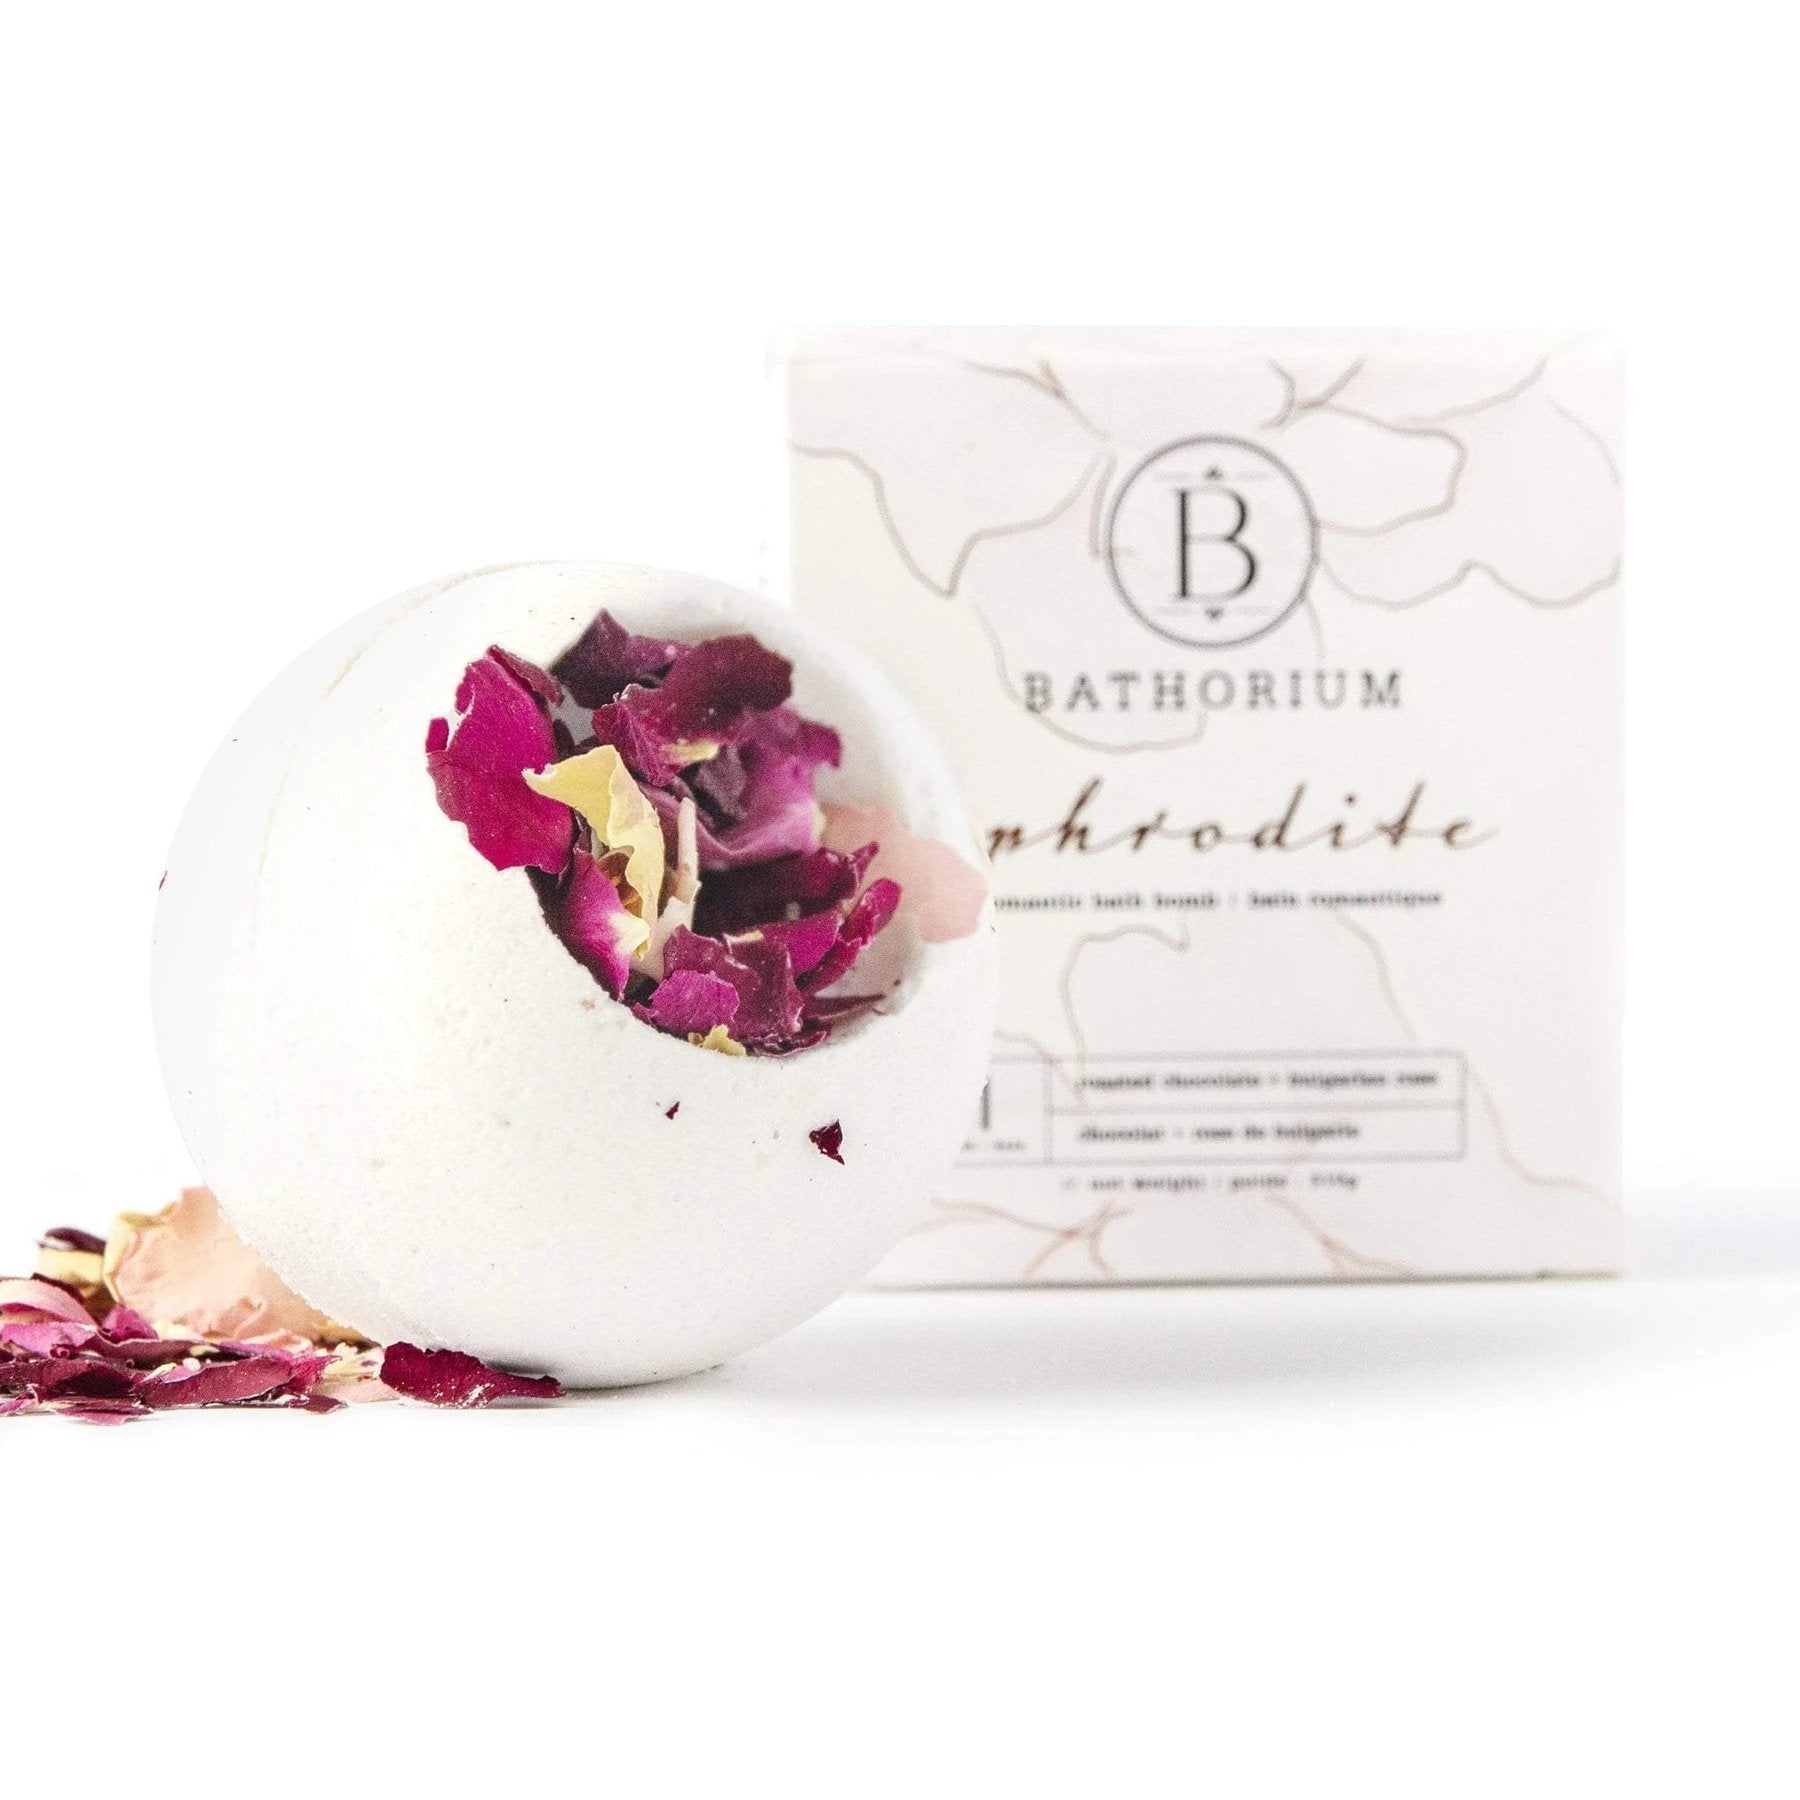 Aphrodite - Chocolate & Bulgarian Rose Bath Bomb by Bathorium